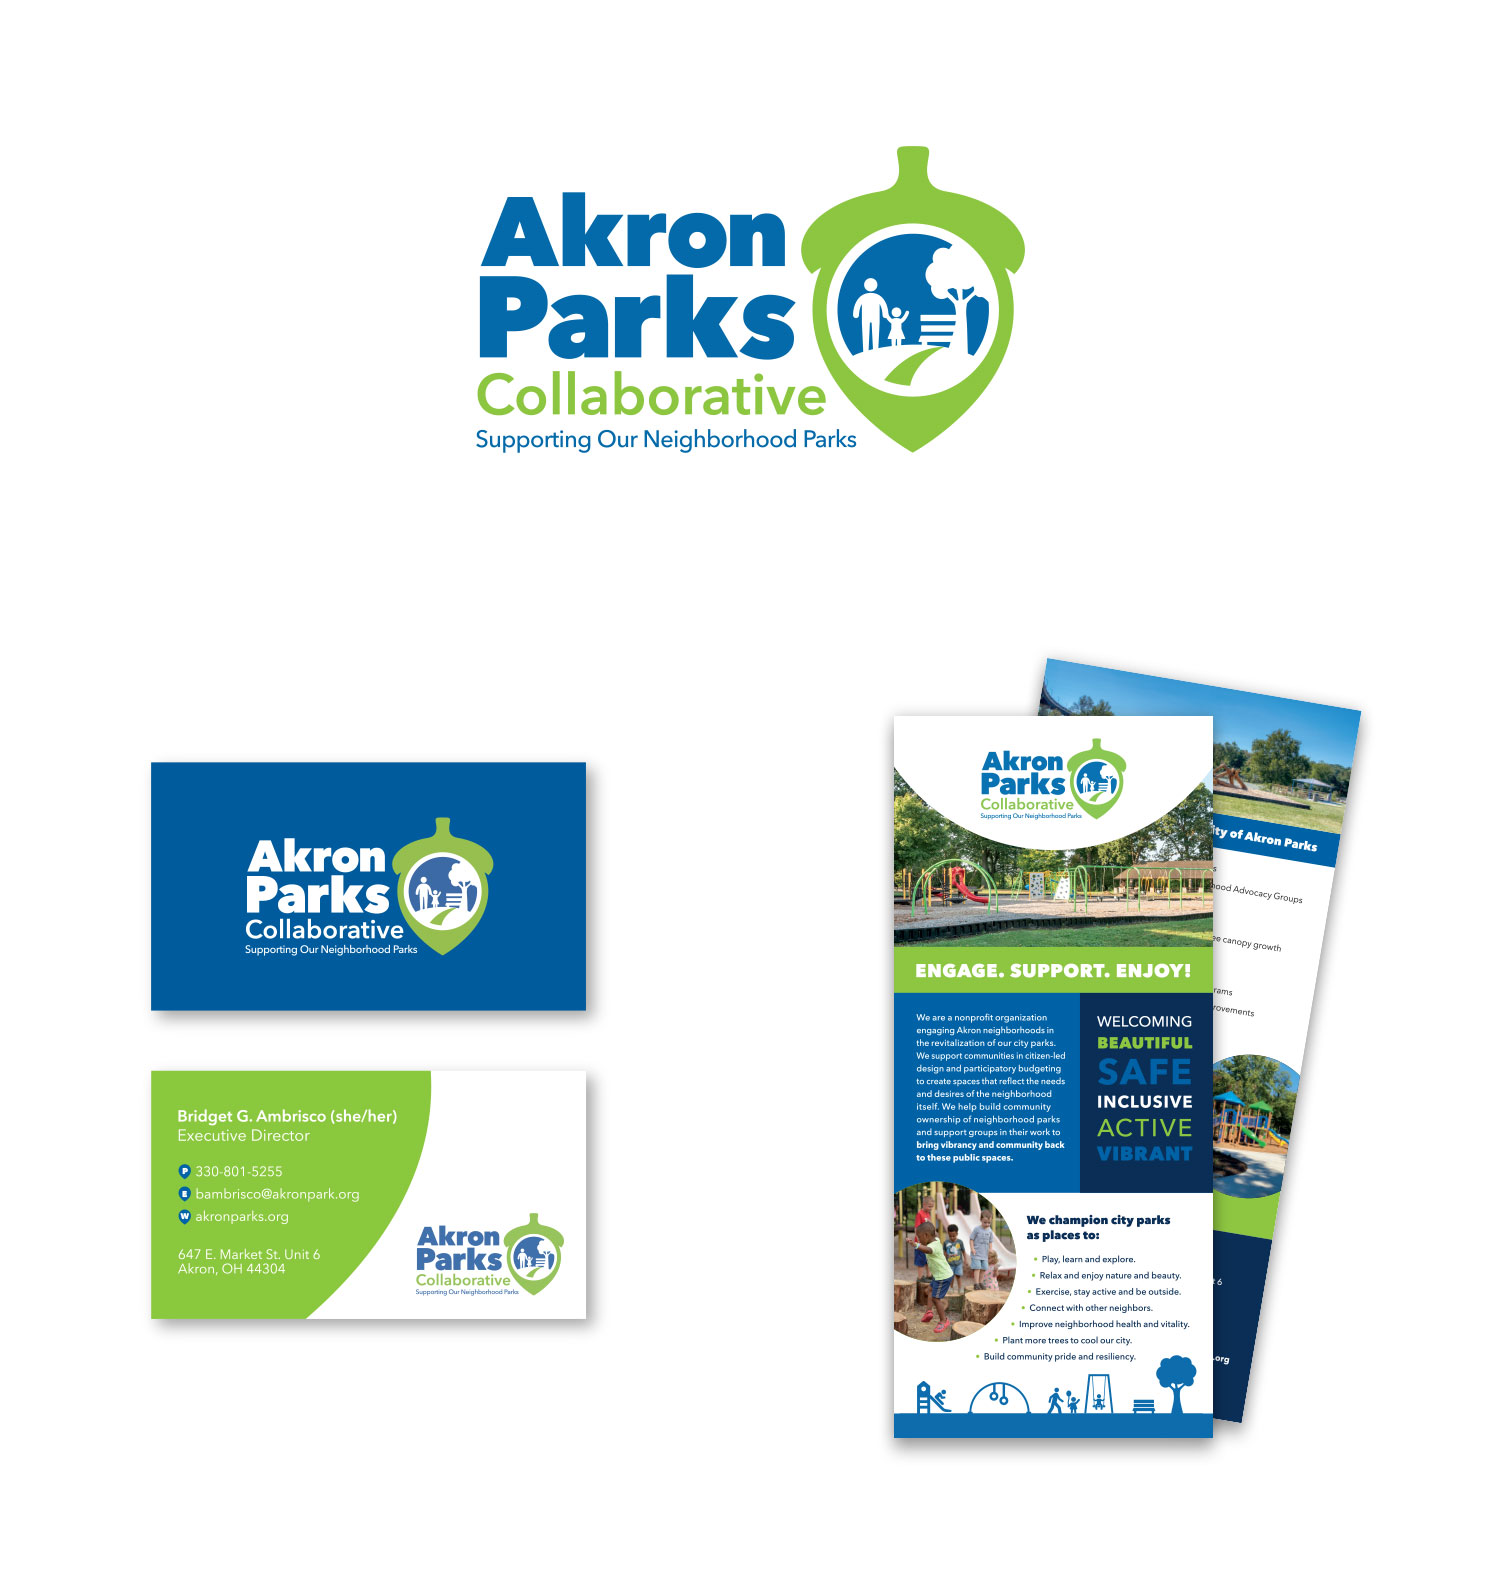 Akron Parks协作-新标识、名片和机架卡设计